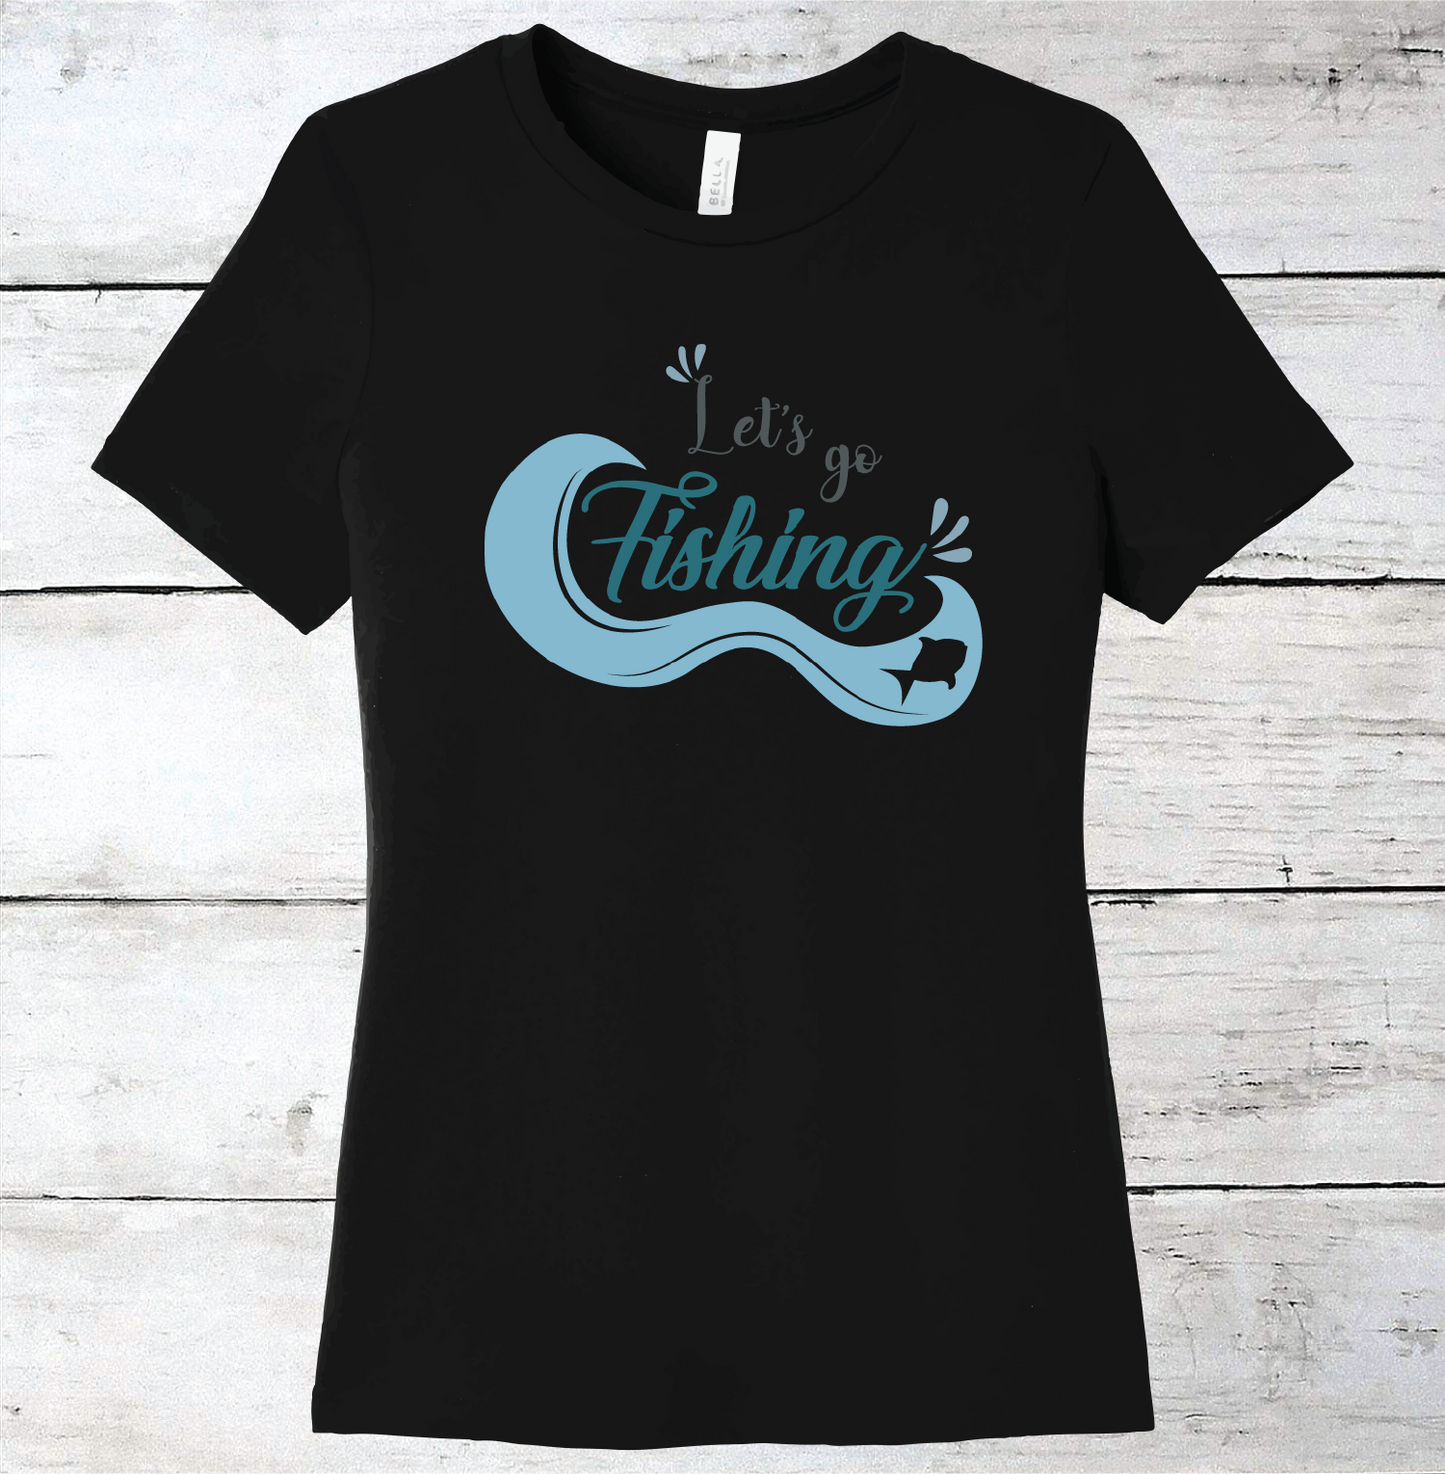 Let's Go Fishing T-Shirt